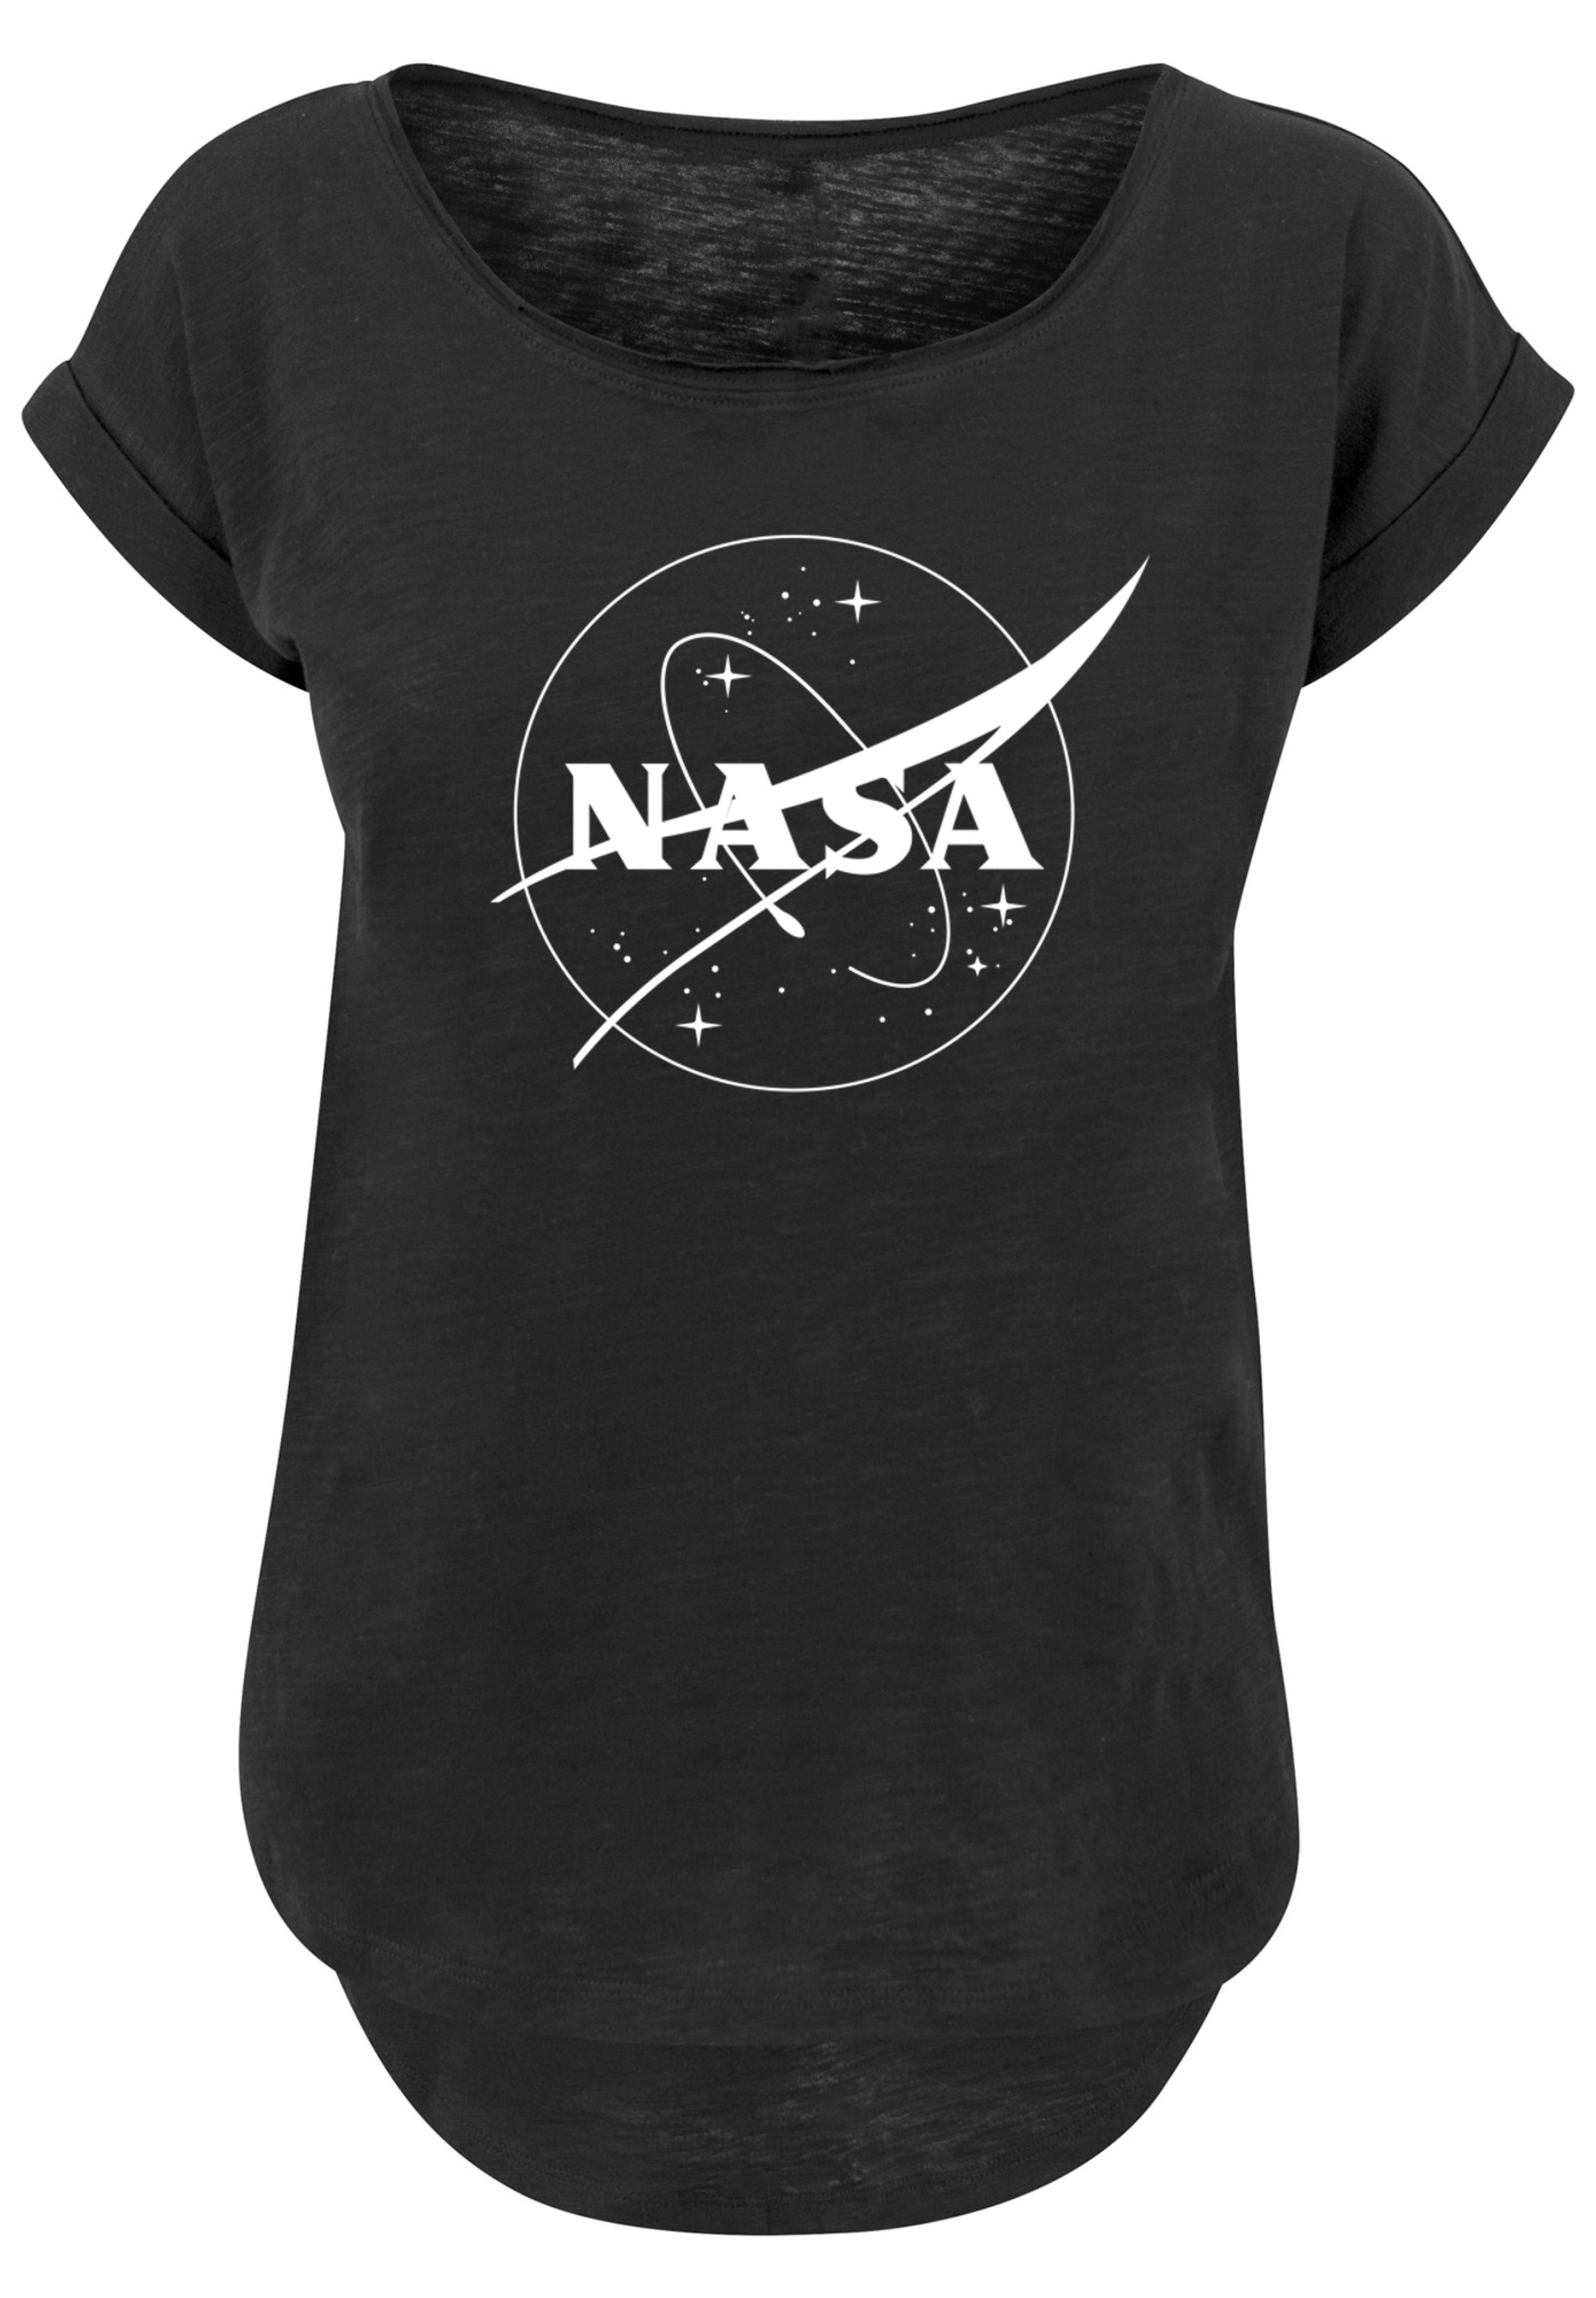 »Long Cut T-Shirt Logo F4NT4STIC Print Insignia T-Shirt \'NASA bestellen Monochrome\'«, Classic